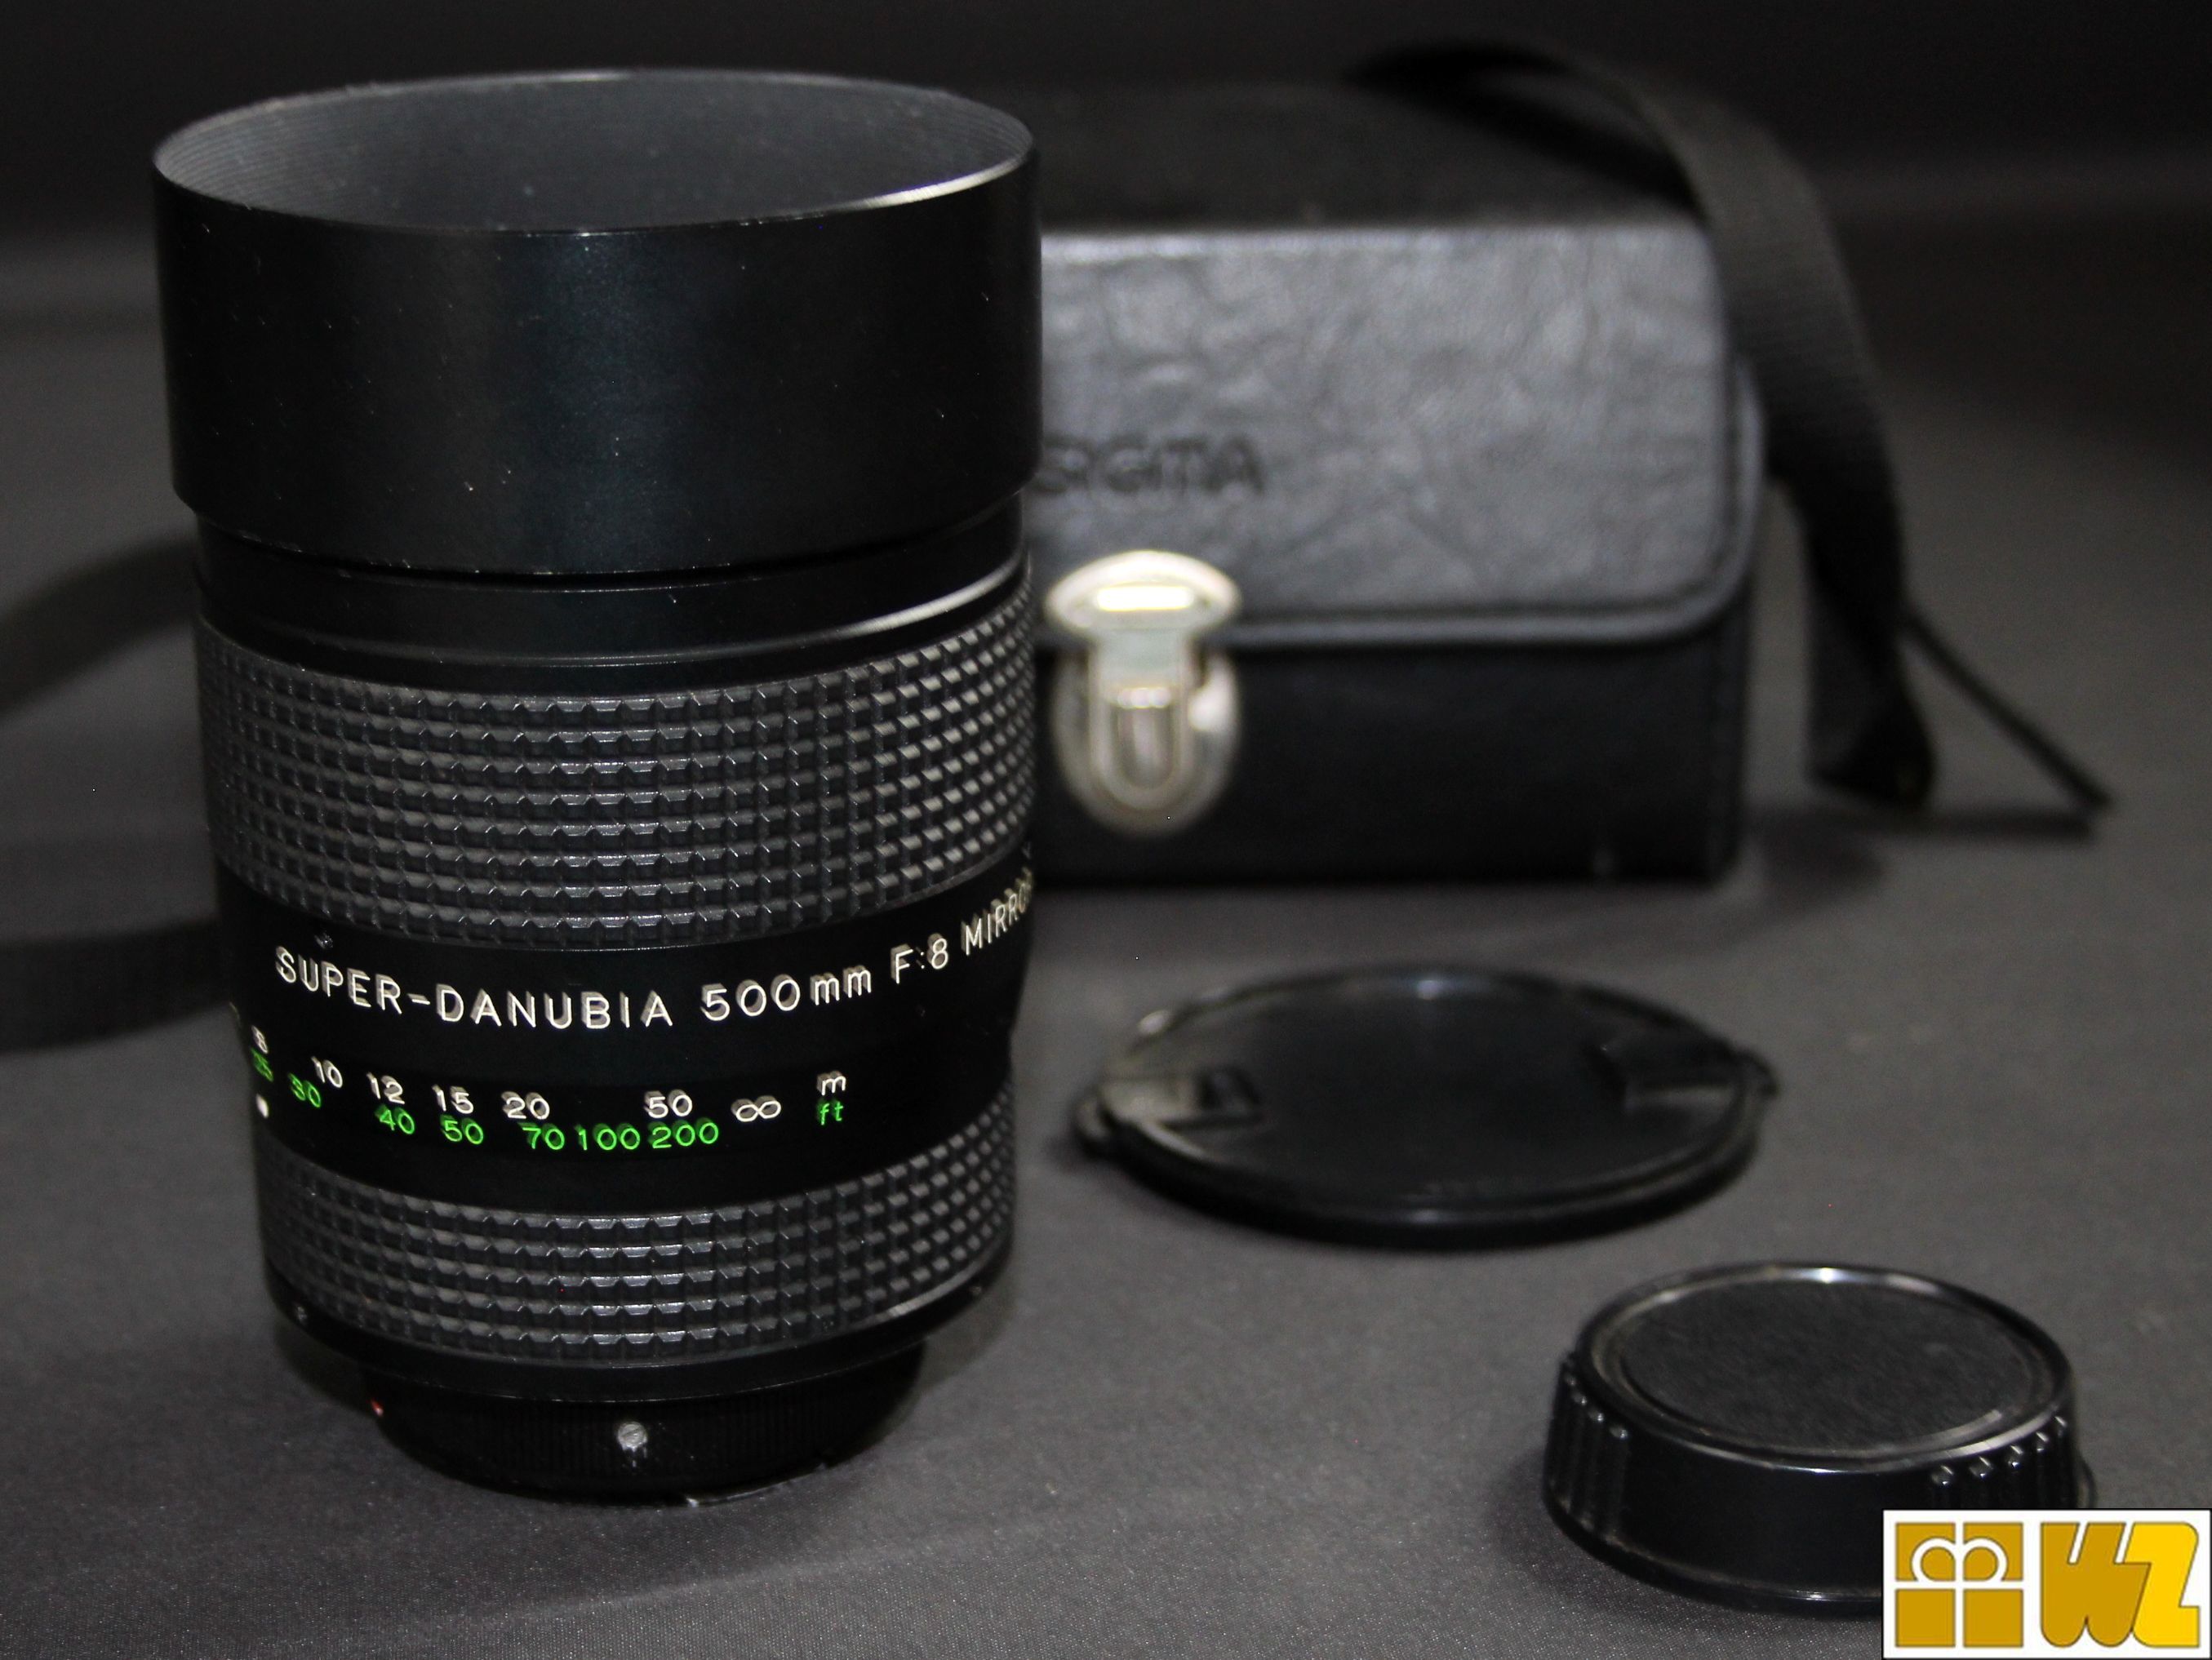 Super-Danubia 500mm f/8 Mirror Lens